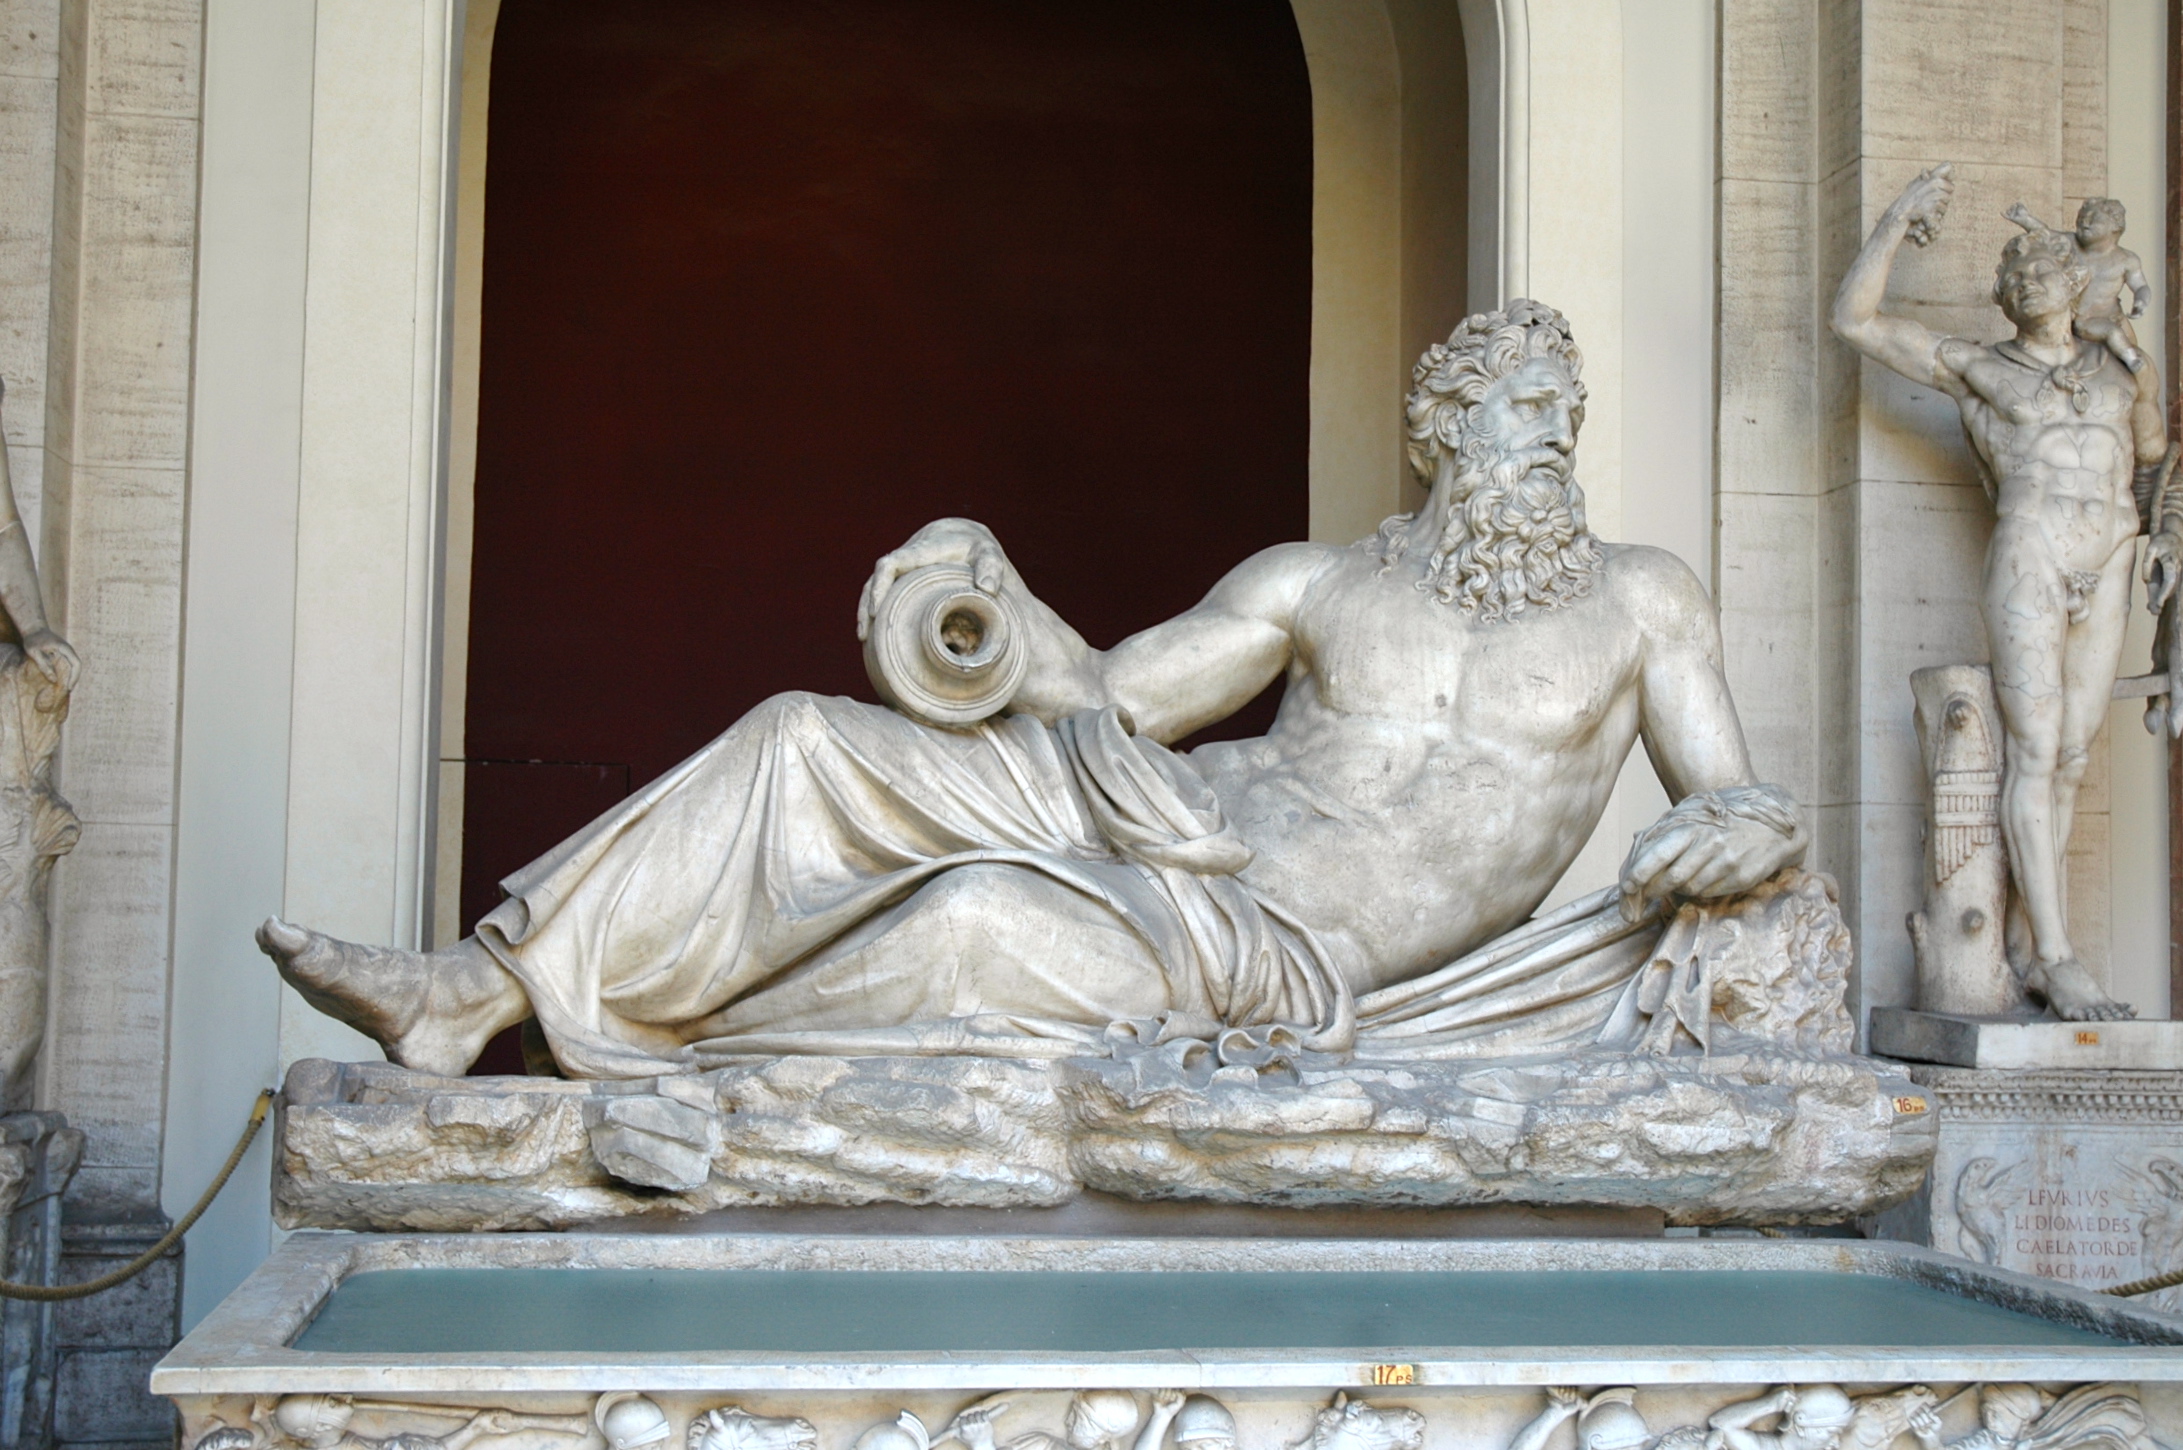 Escultura no Museu do Vaticano